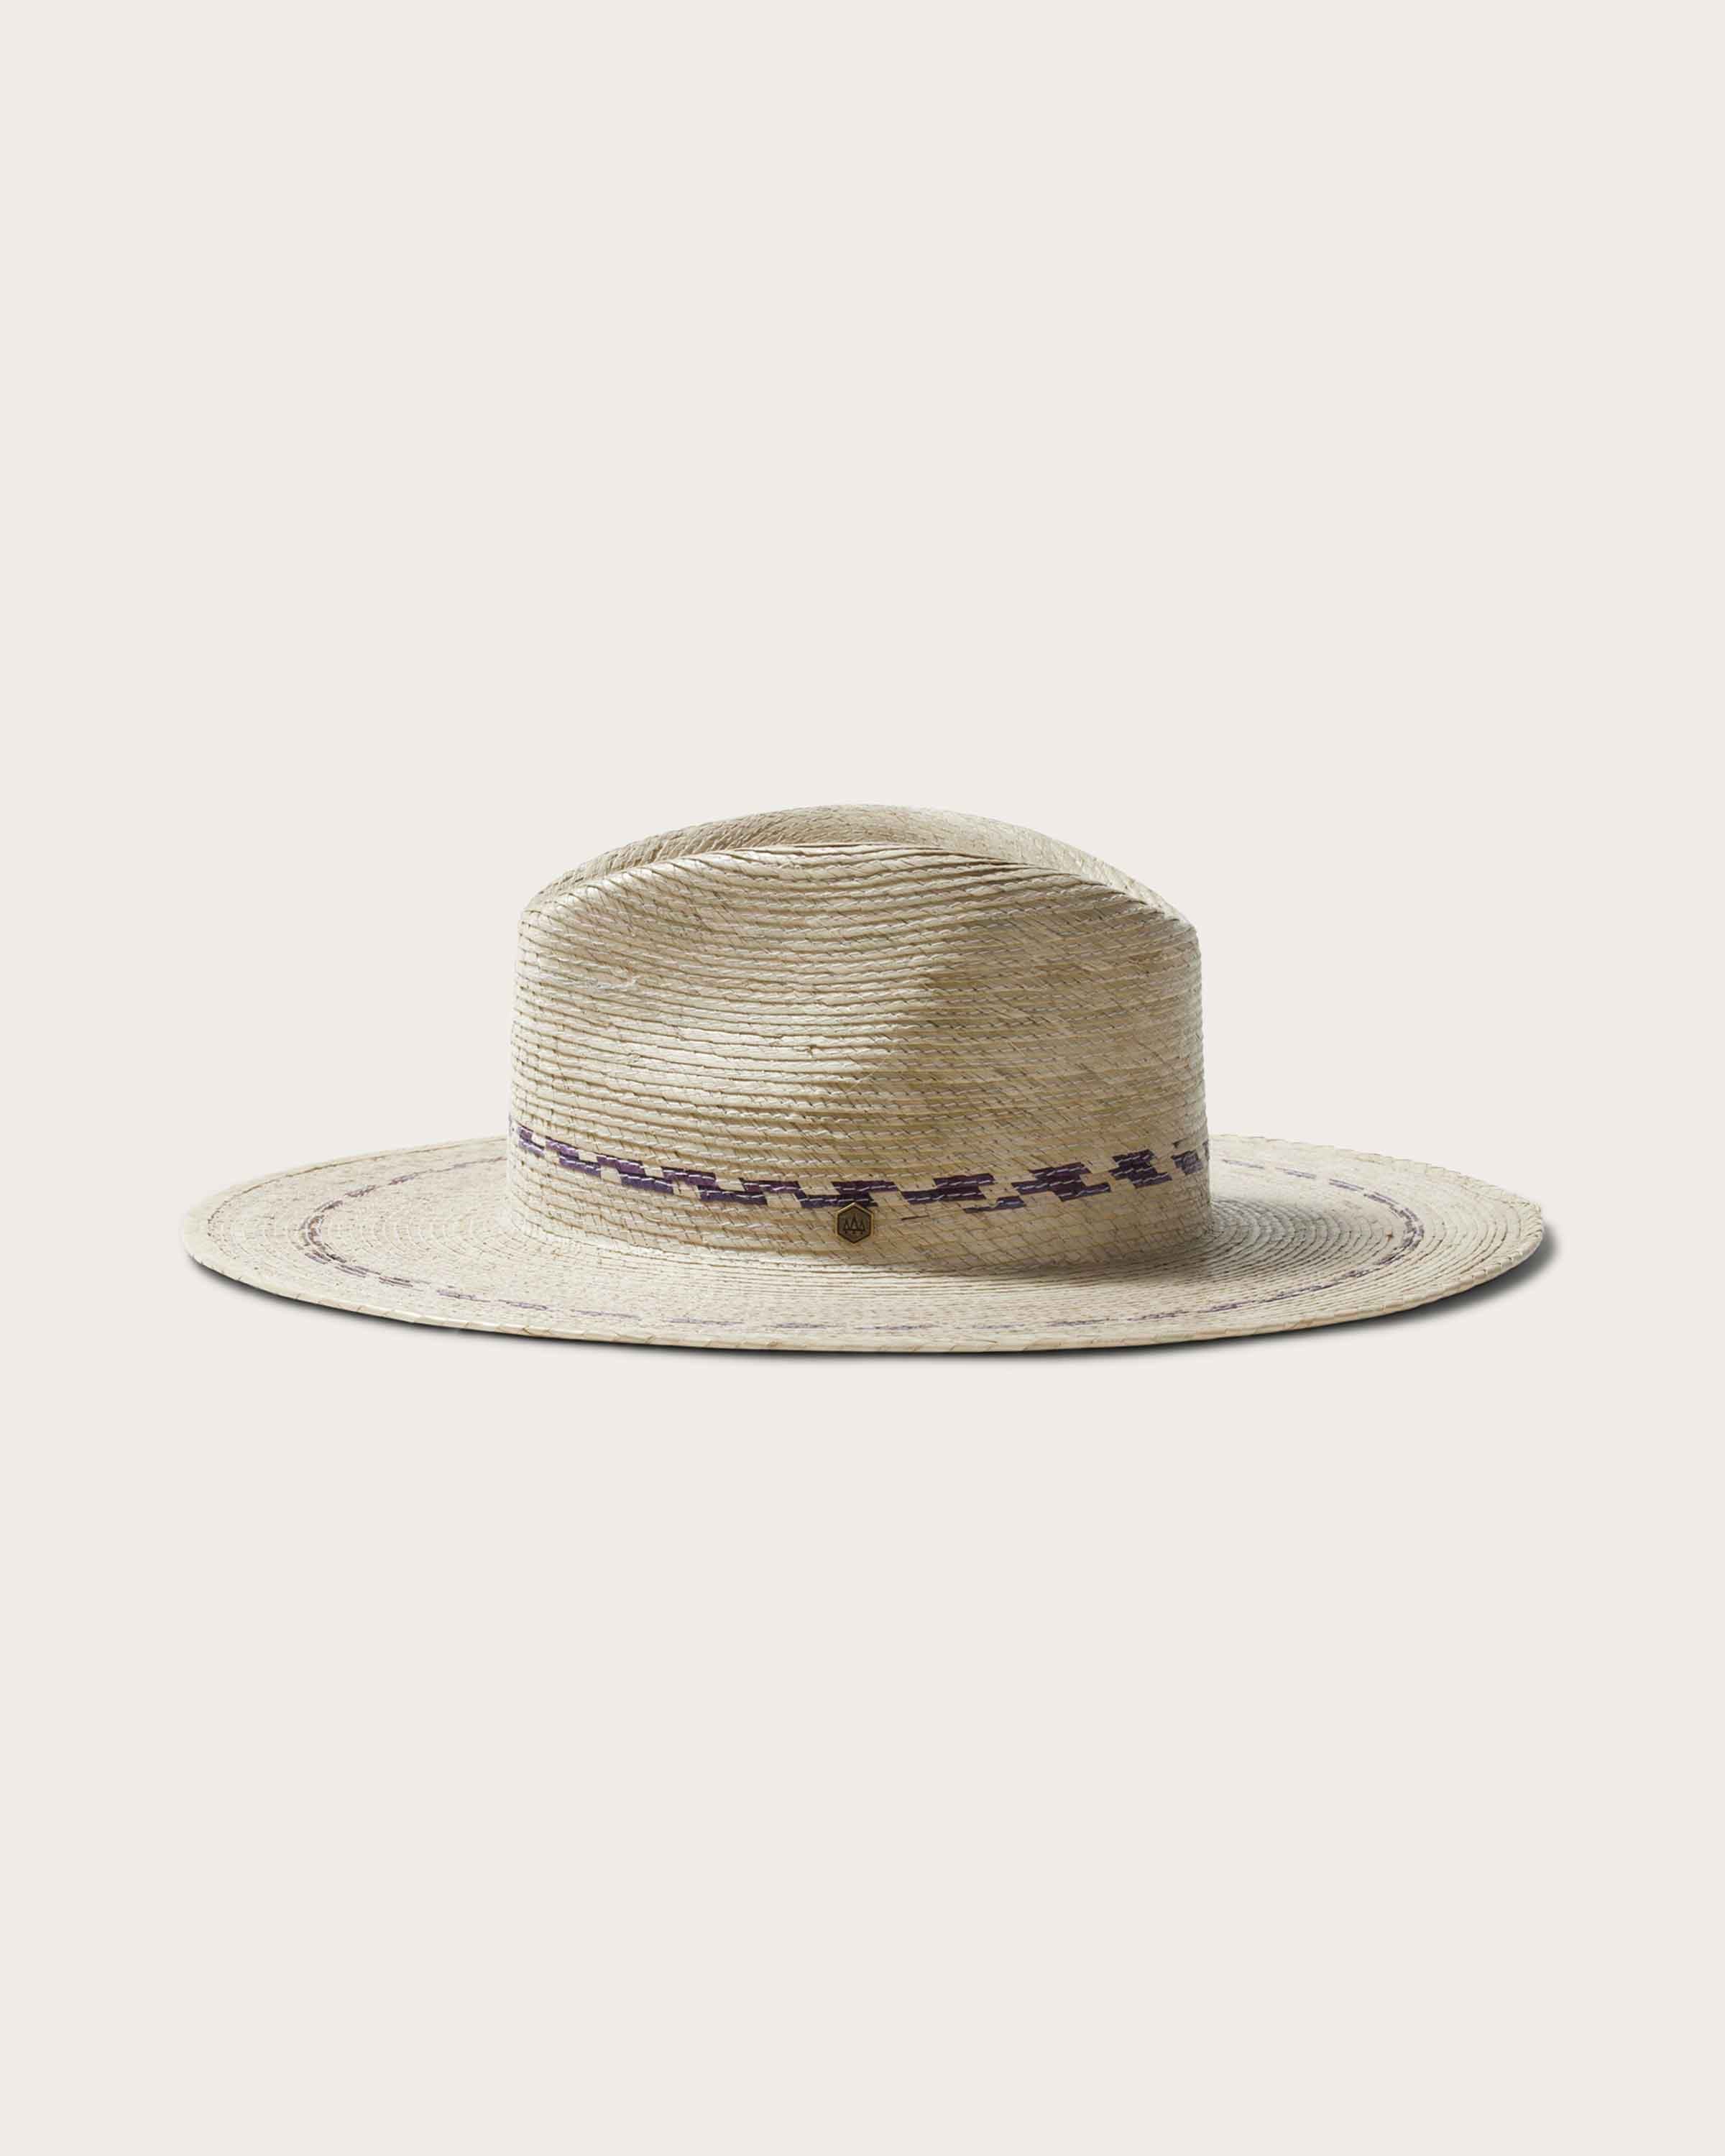 Hermosa in Natural - undefined - Hemlock Hat Co. Premium